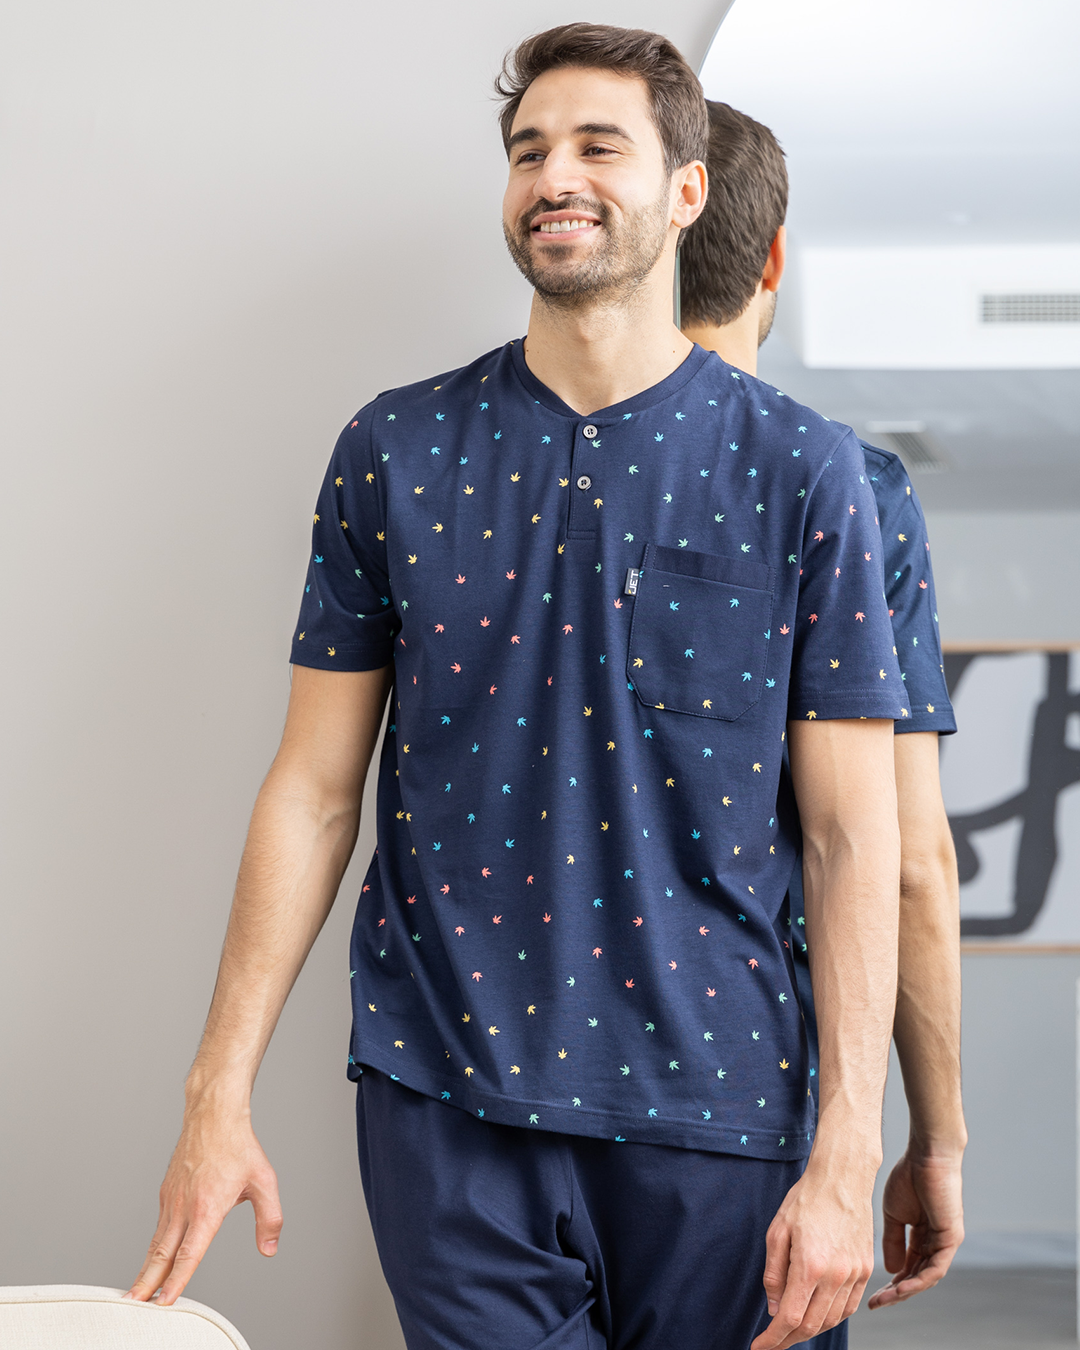 Men's pajamas, rhubarb brisket, chest pocket pants with an item